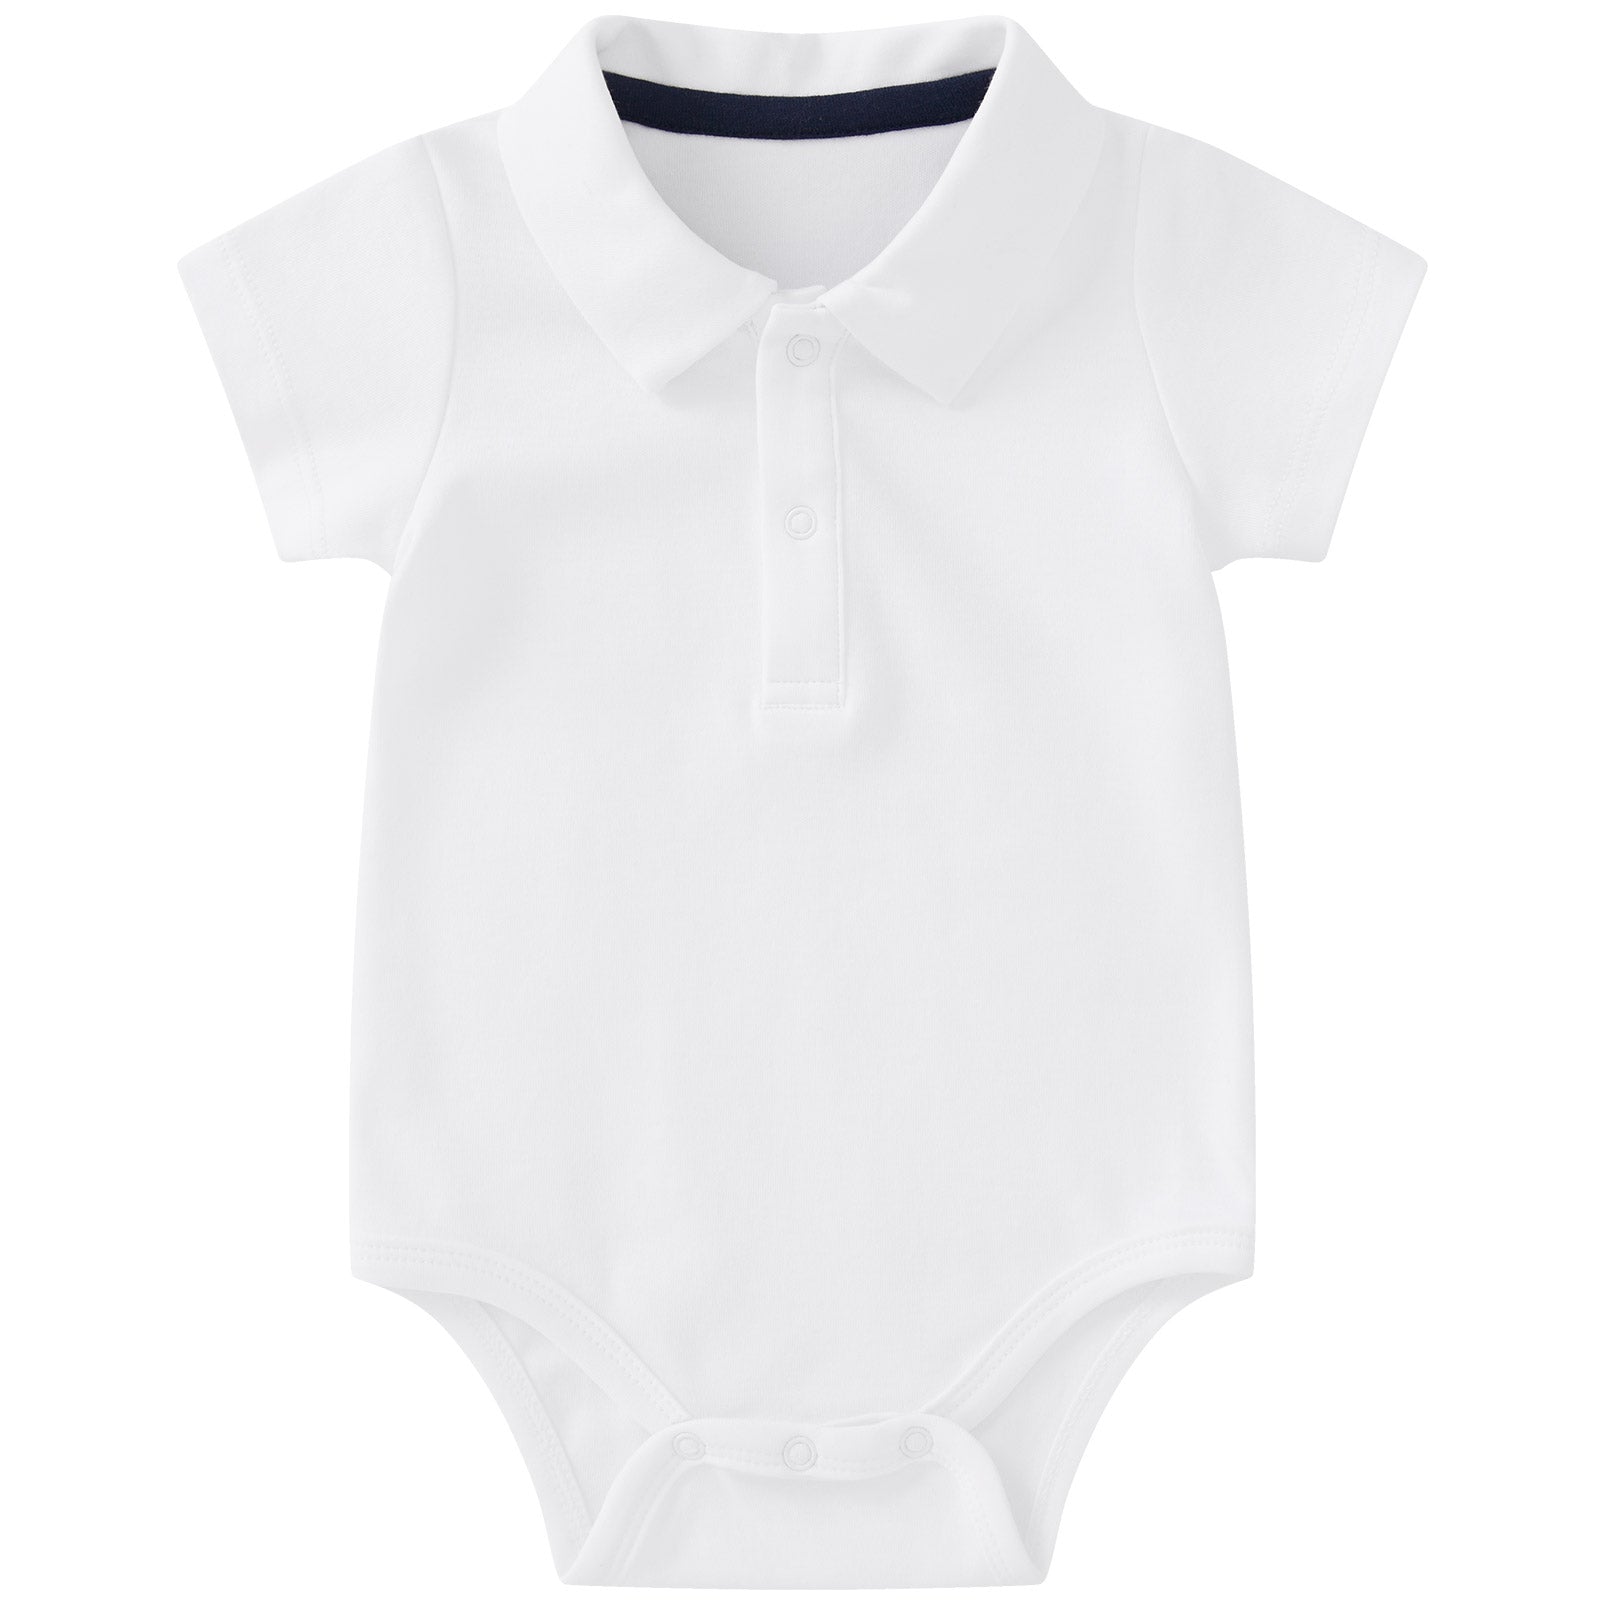 pureborn Baby Boy Bodysuit Short Sleeve Cotton Romper Summer Gentleman One-Piece Outfit for Infant Boys